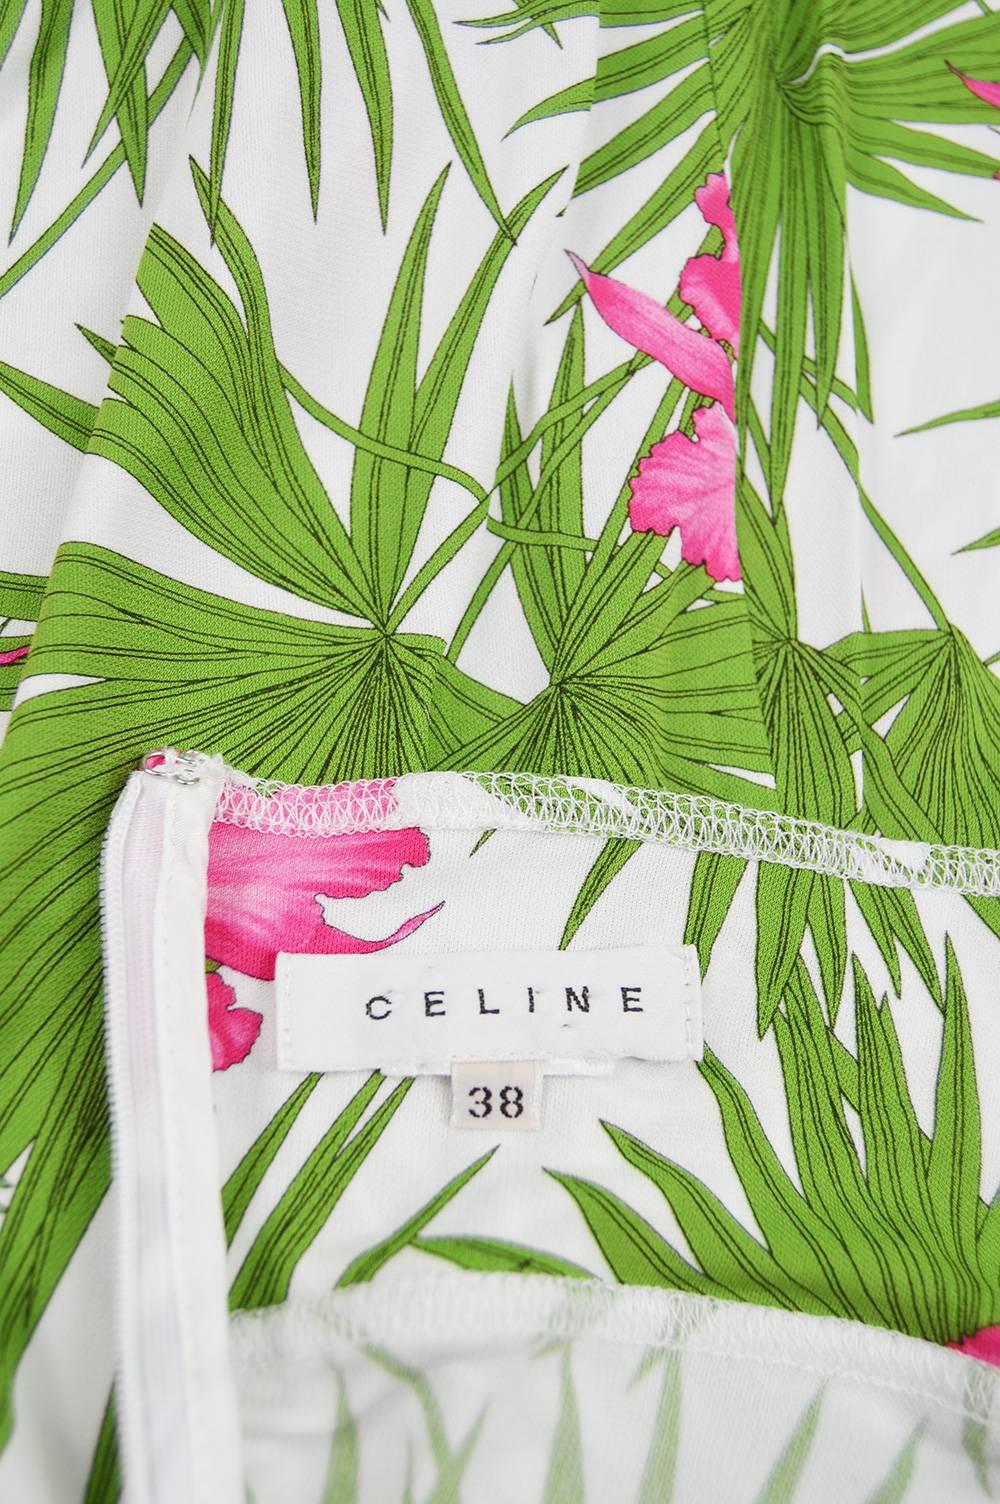 Céline by Michael Kors White Jersey Tropical Halter Dress, S / S 2004 2